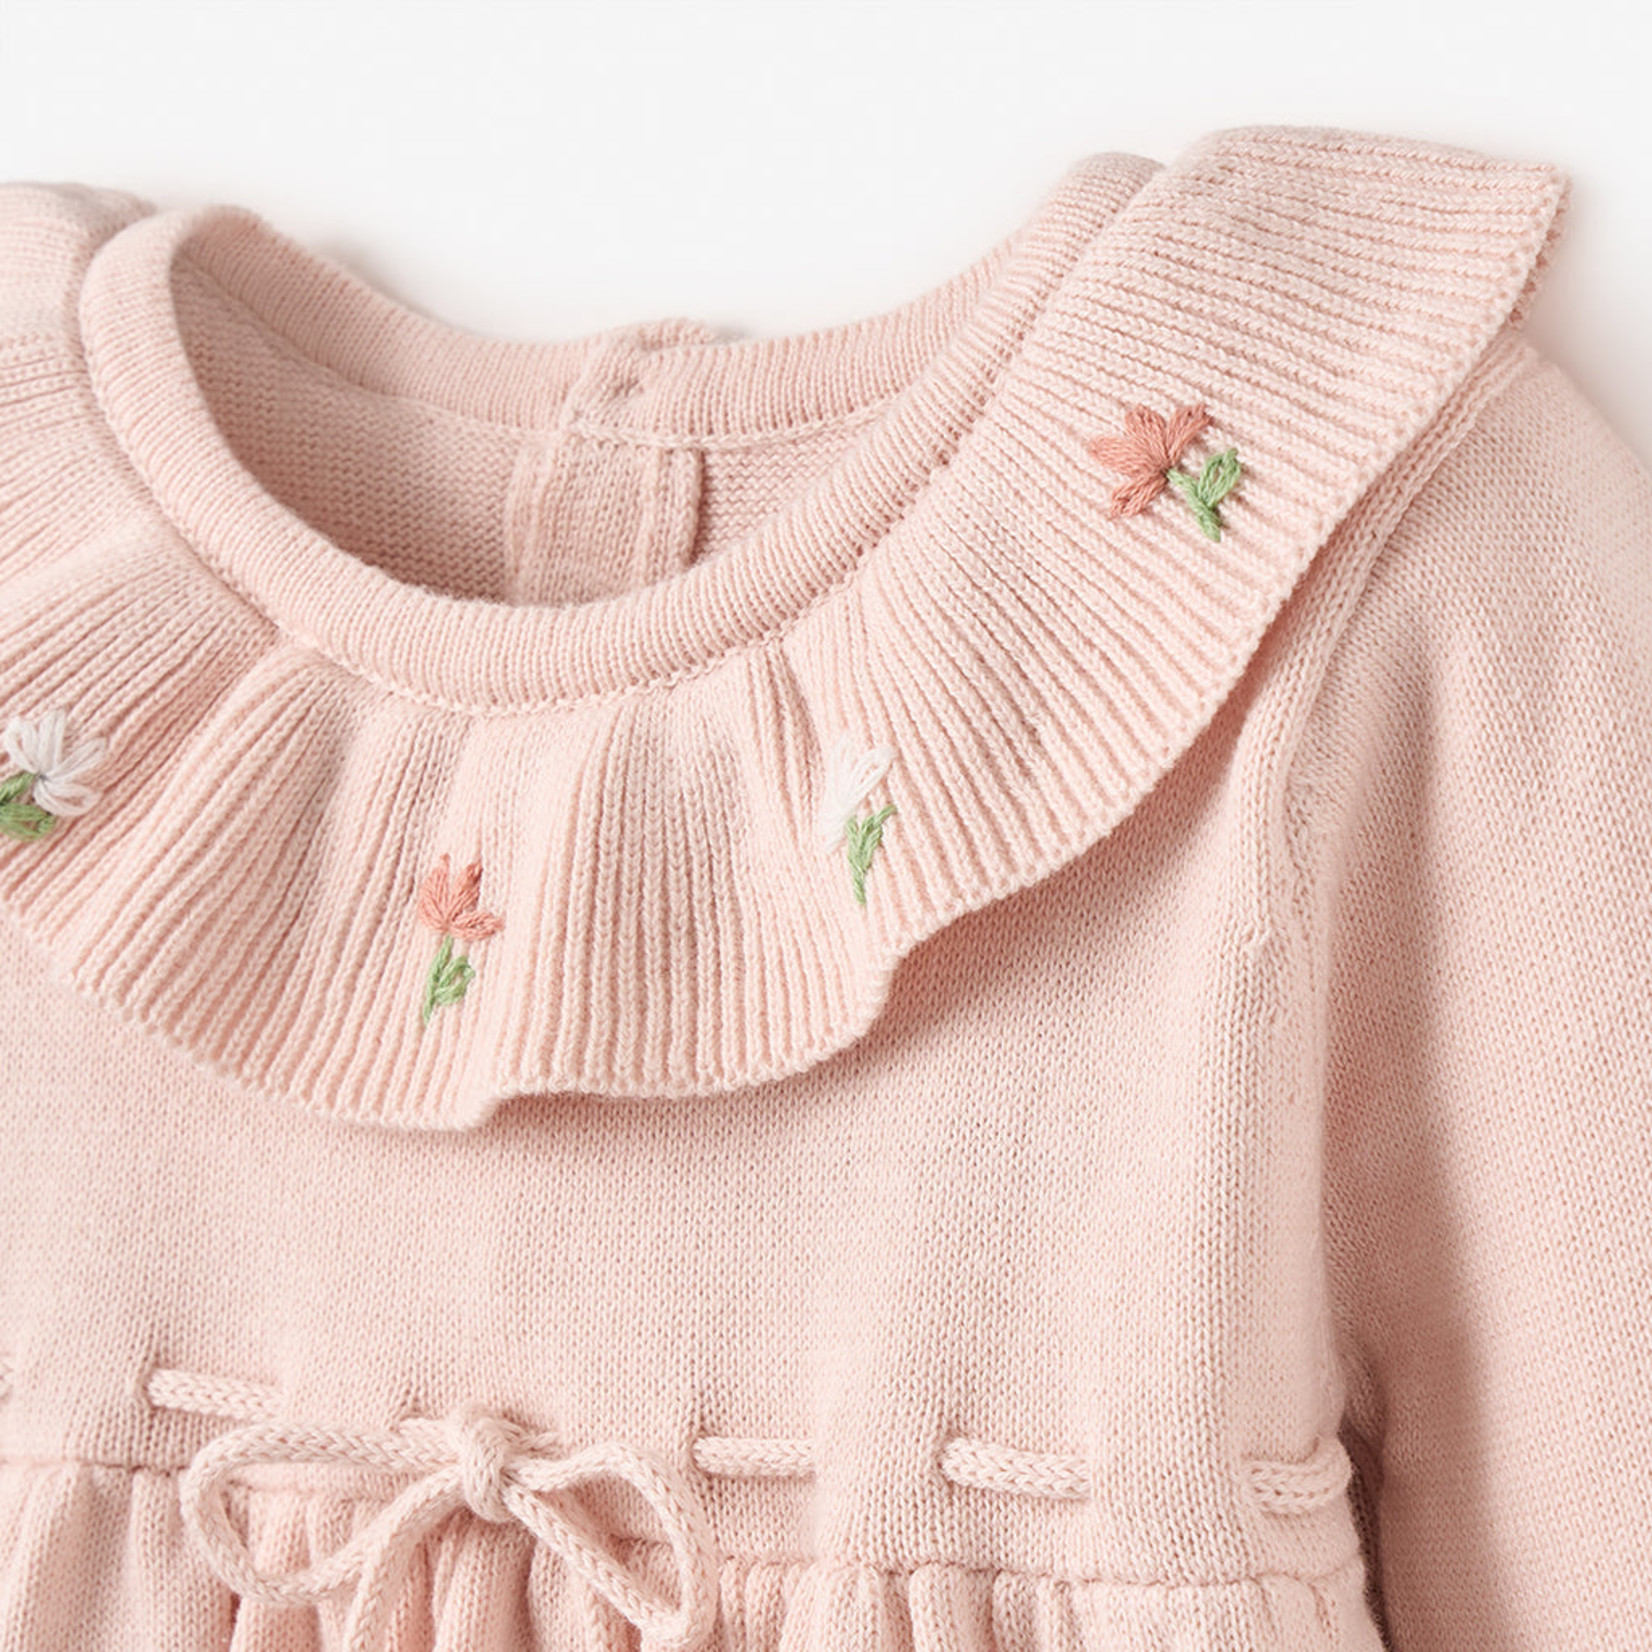 Elegant Baby Meadow Flower Dress w/Bloomer Pink 3-6M